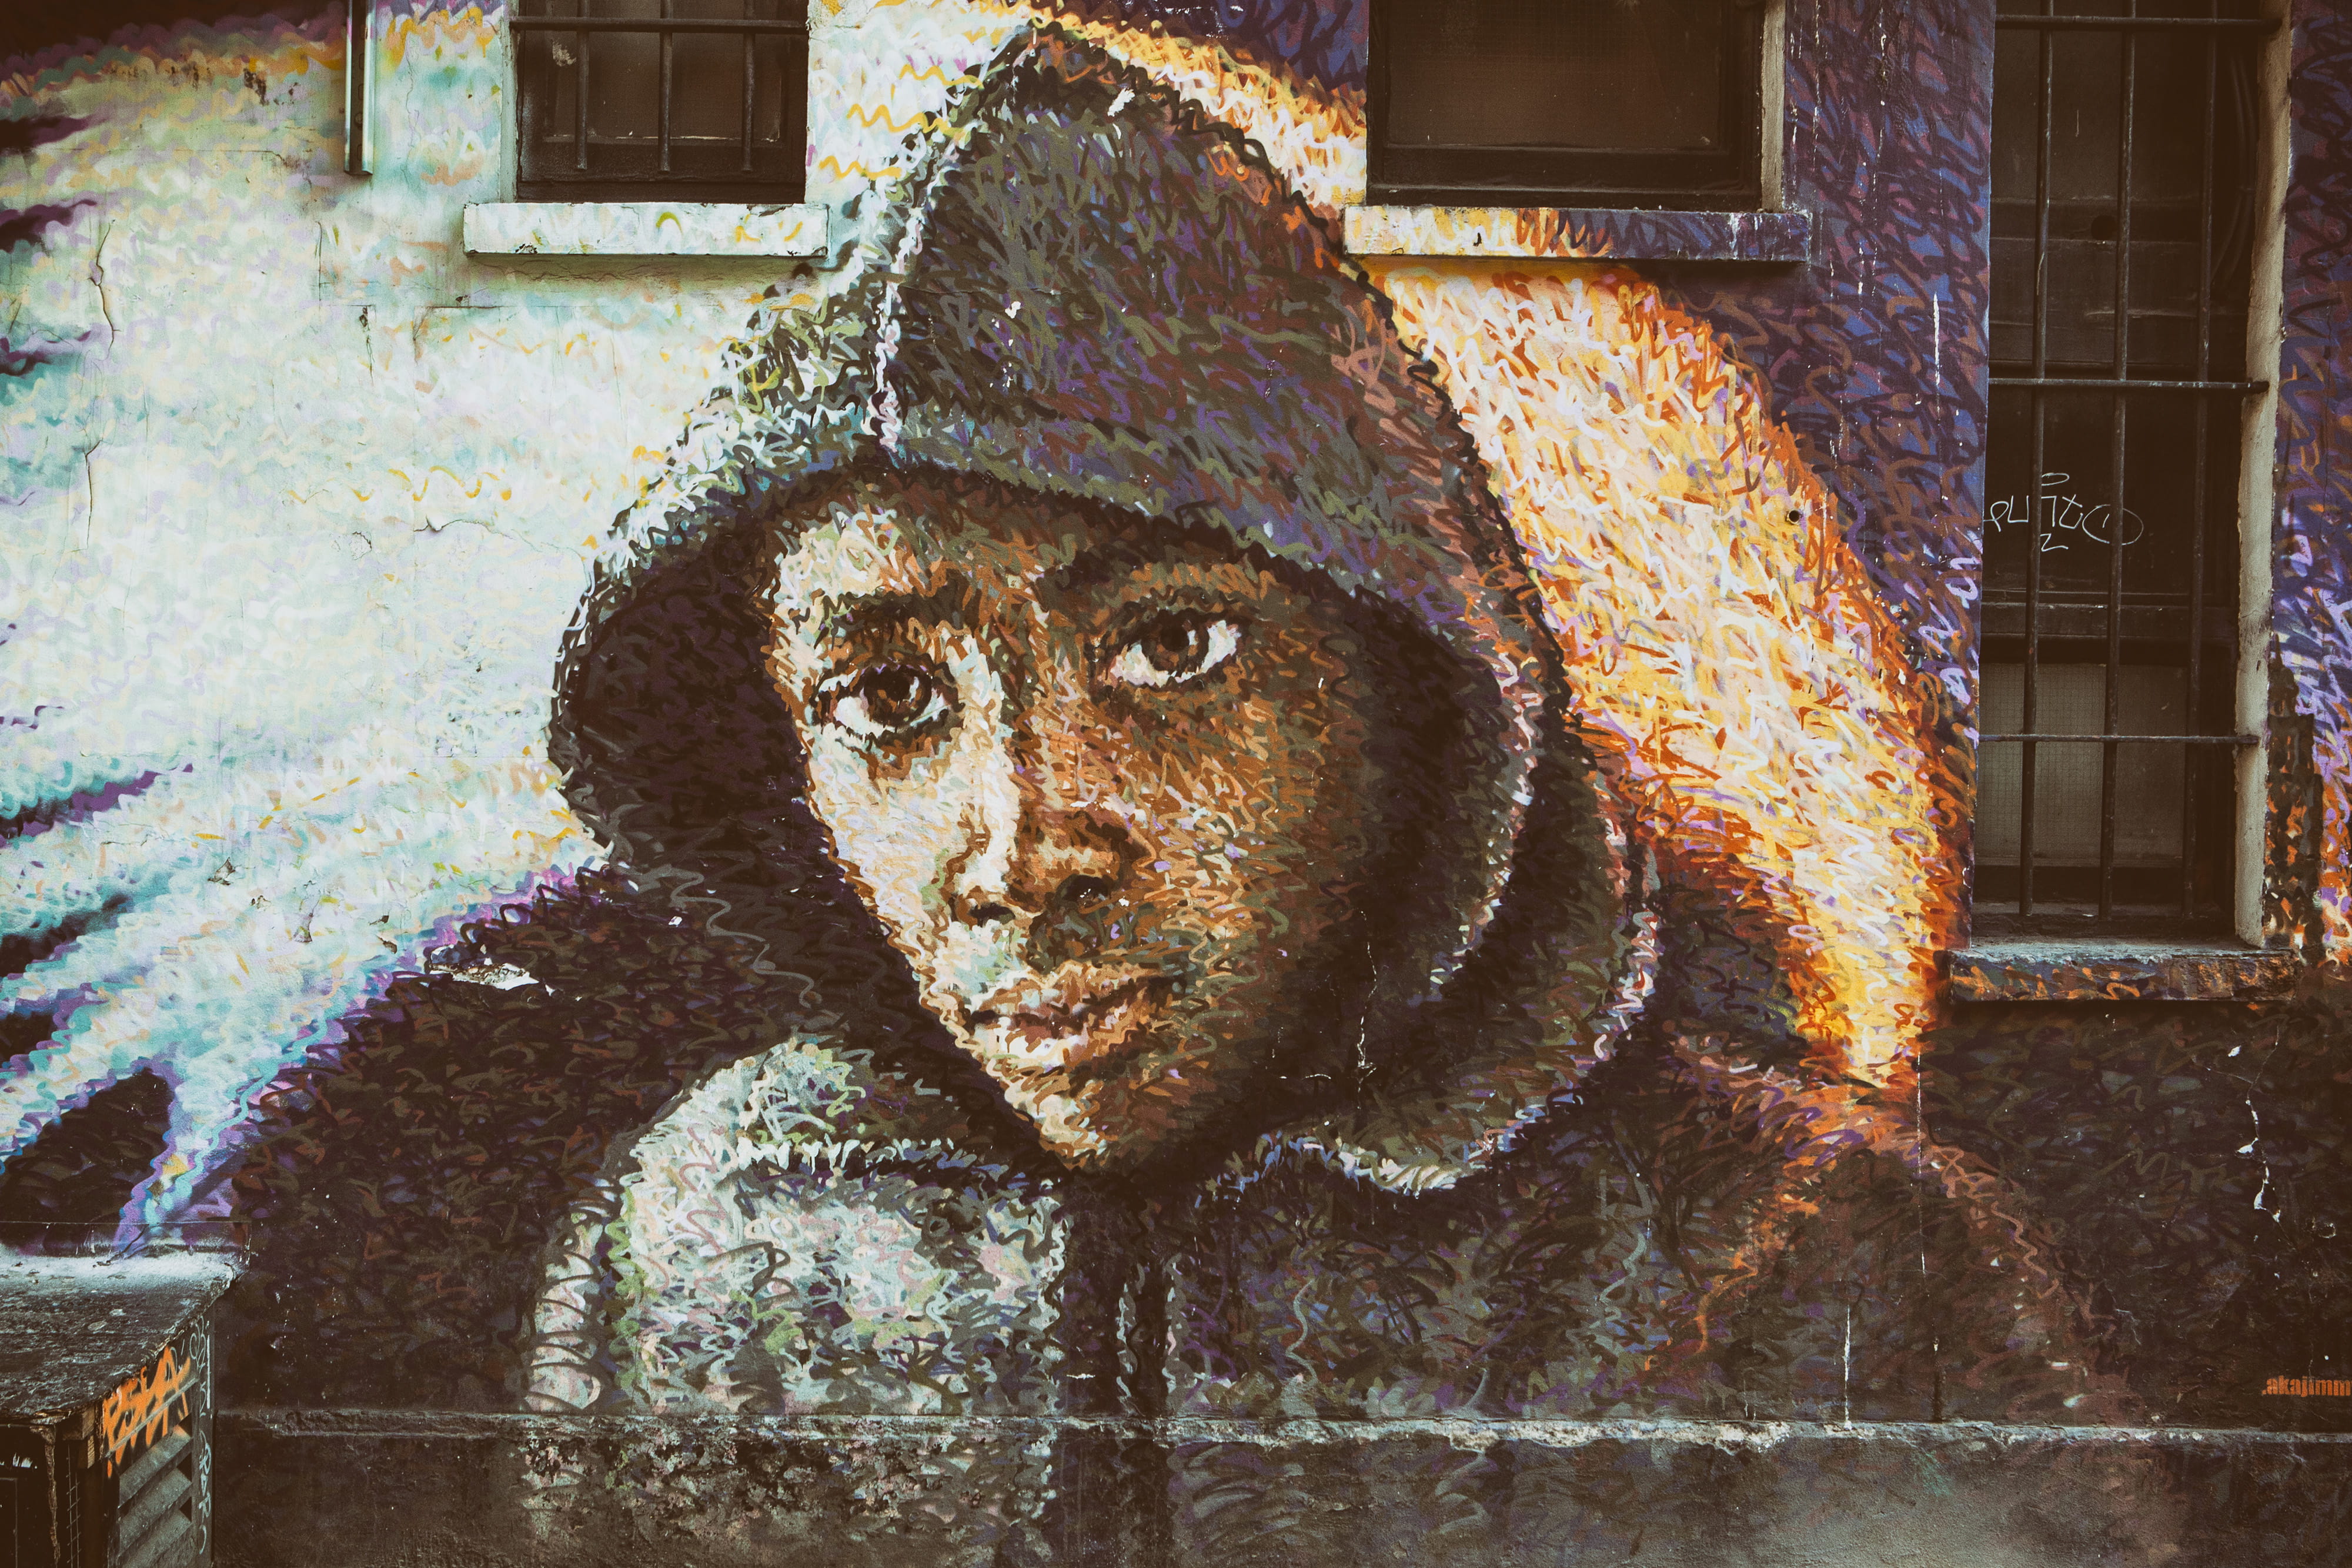 Street Art depicting a man wearing a hoodie top, urban, graffiti